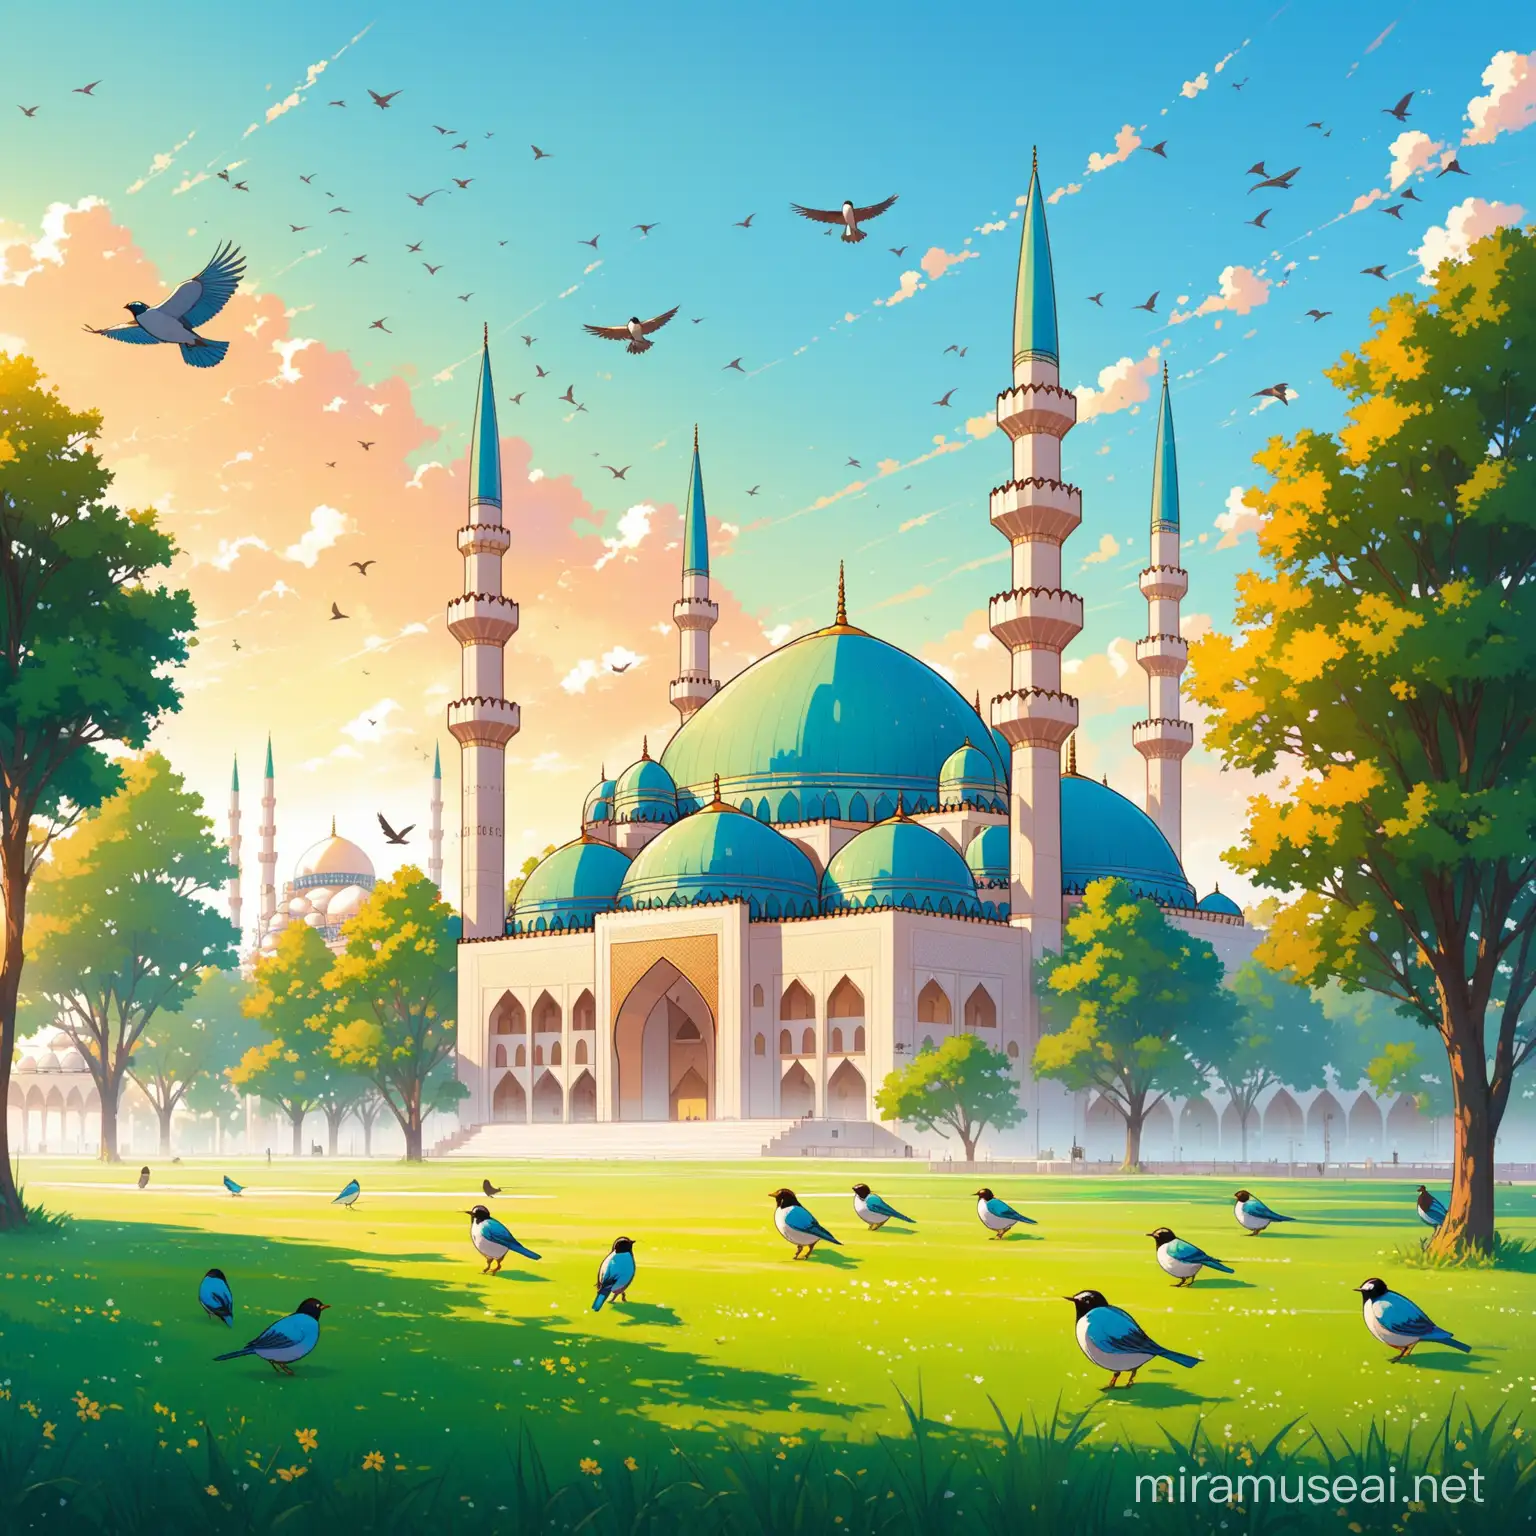 A big mosque + birds + trees + grass